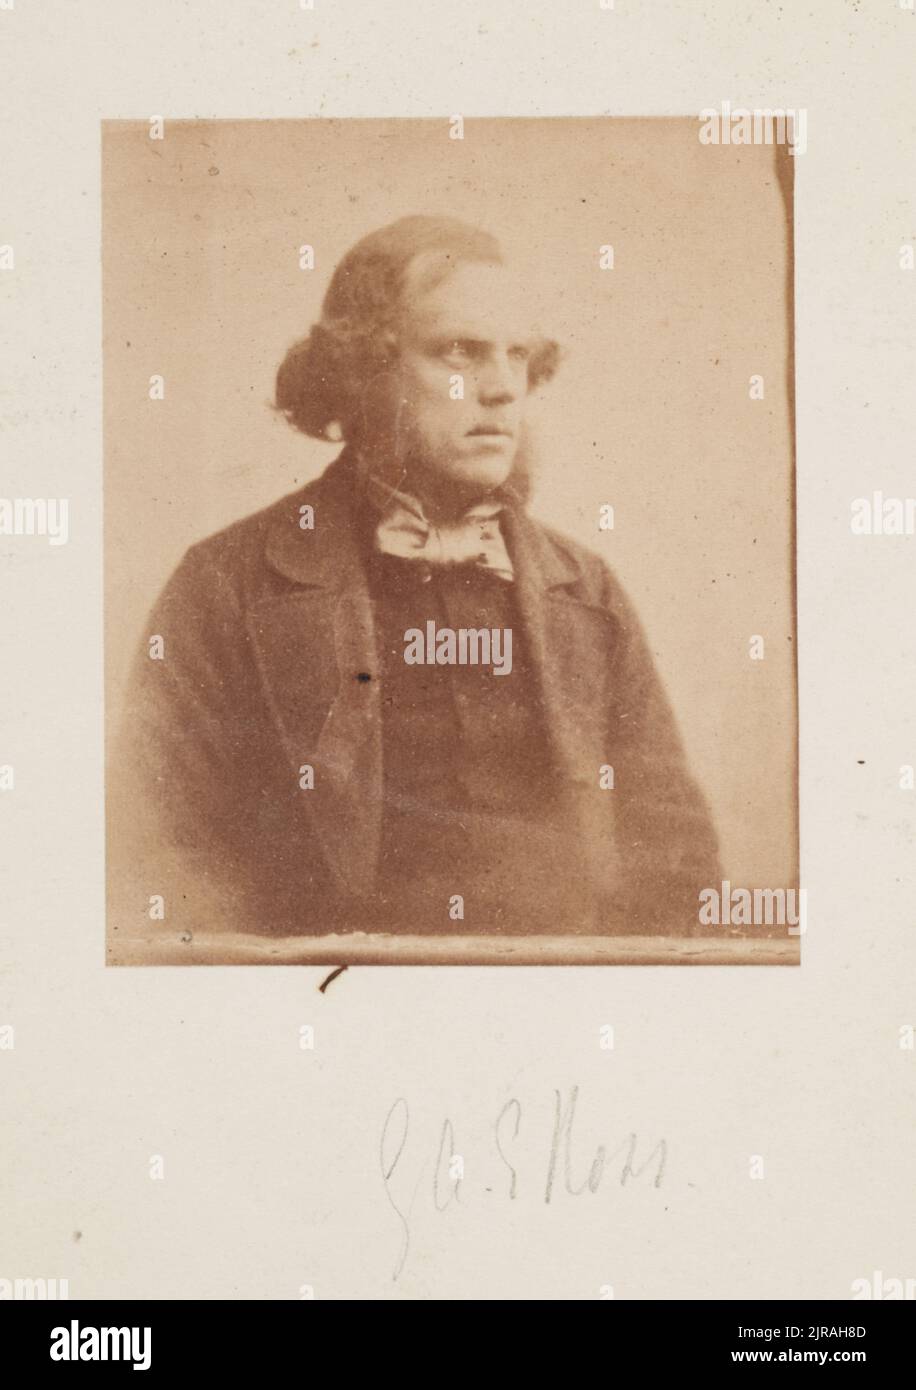 S G S Moss, 1858-1860, Christchurch, von Dr. Alfred Barker. Stockfoto